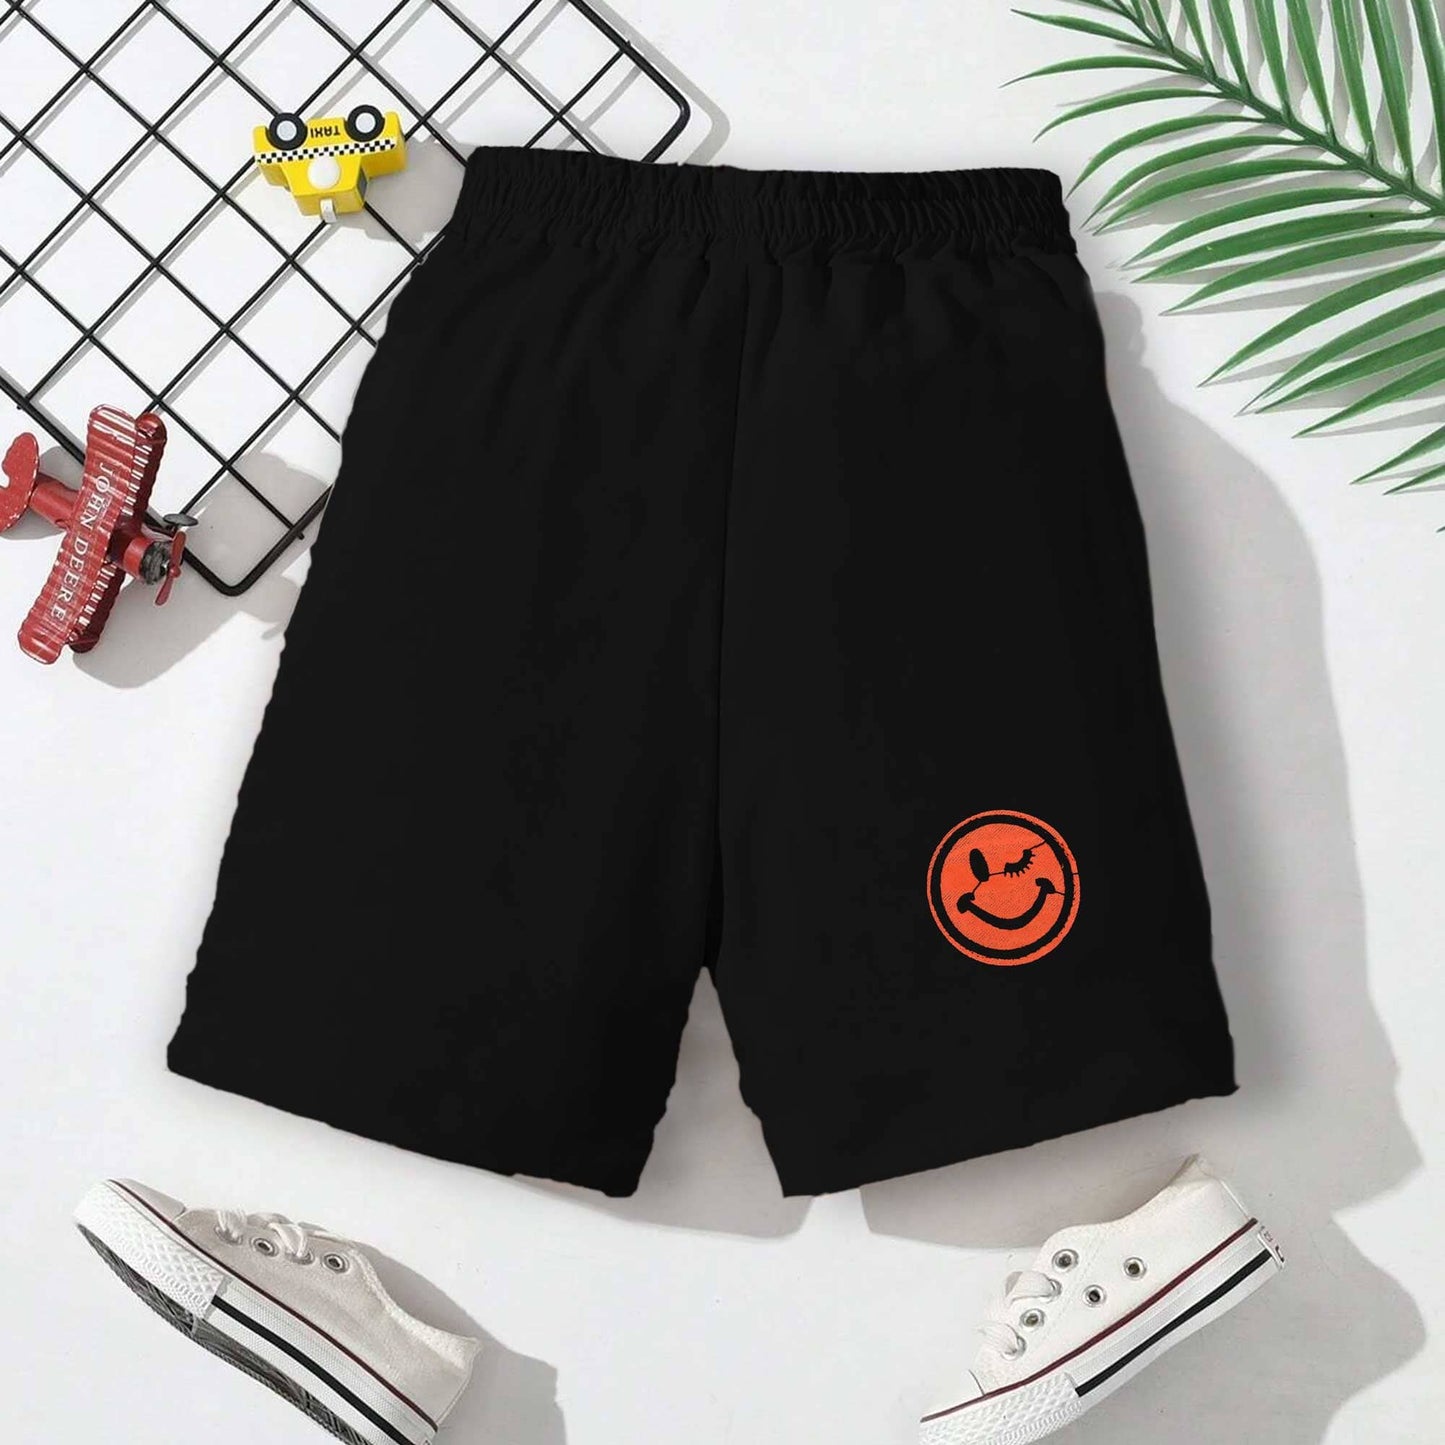 Junior Republice Kid's Emoji Style Terry Shorts Kid's Shorts JRR Black 1-2 Years 